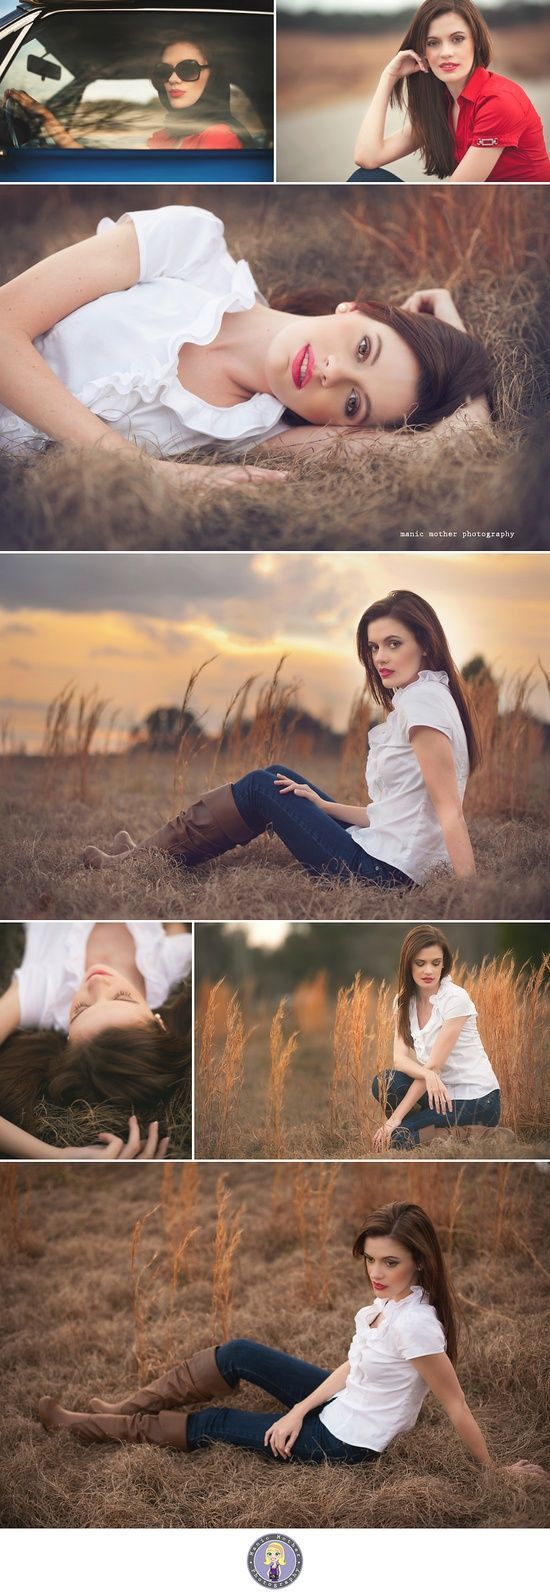 Senior Photography Poses | senior girl photography {posing ideas} / Great poses